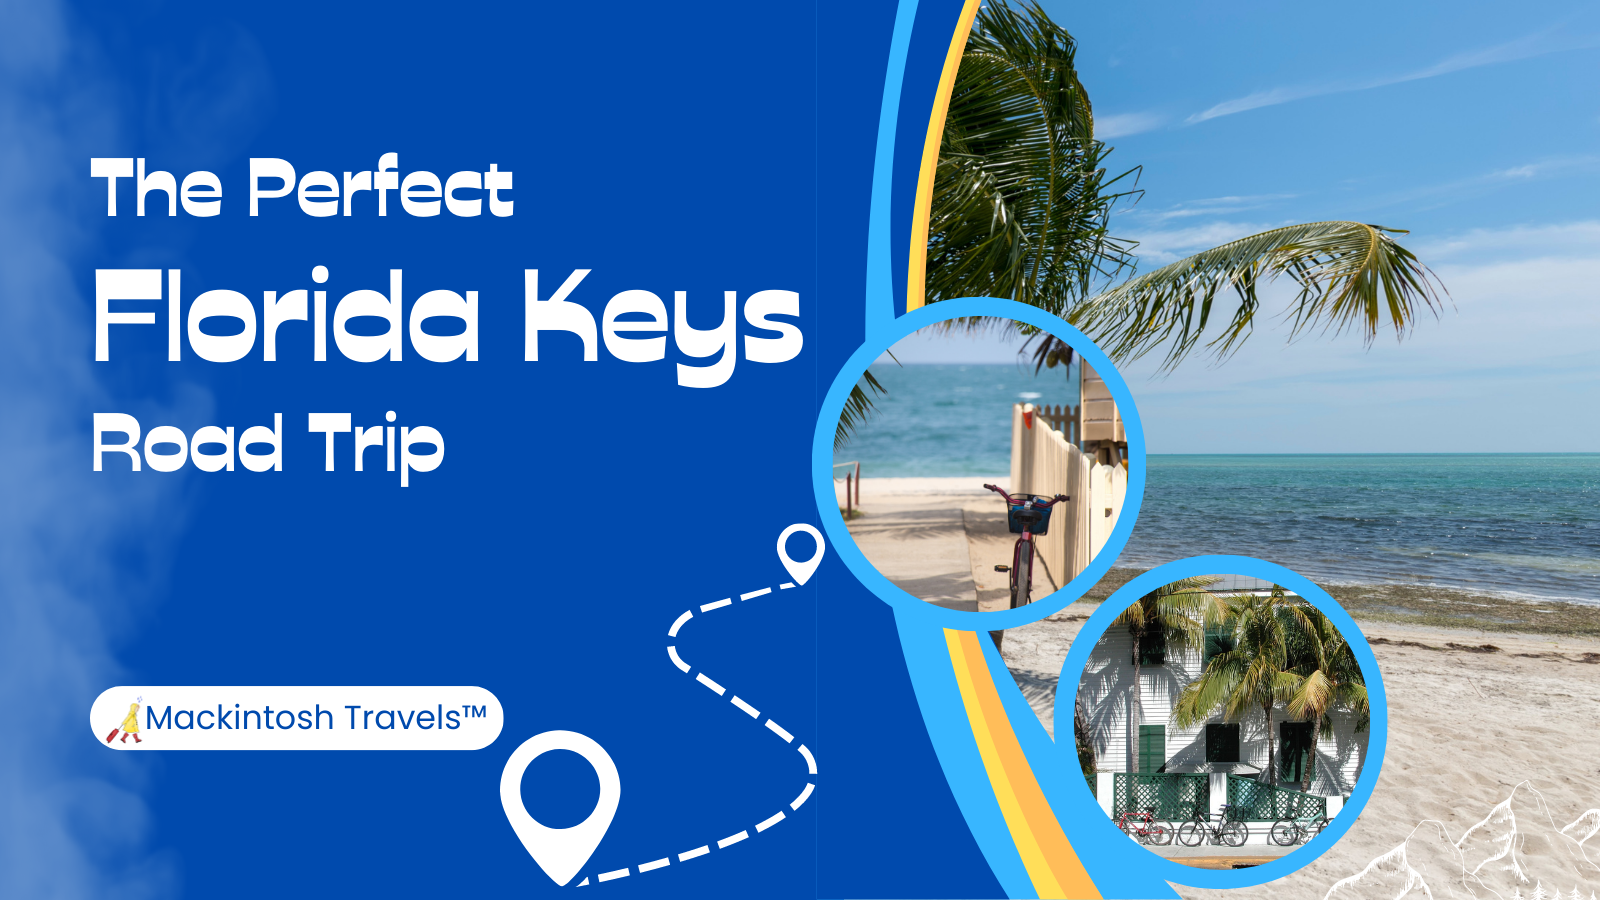 The Perfect Florida Keys Road Trip